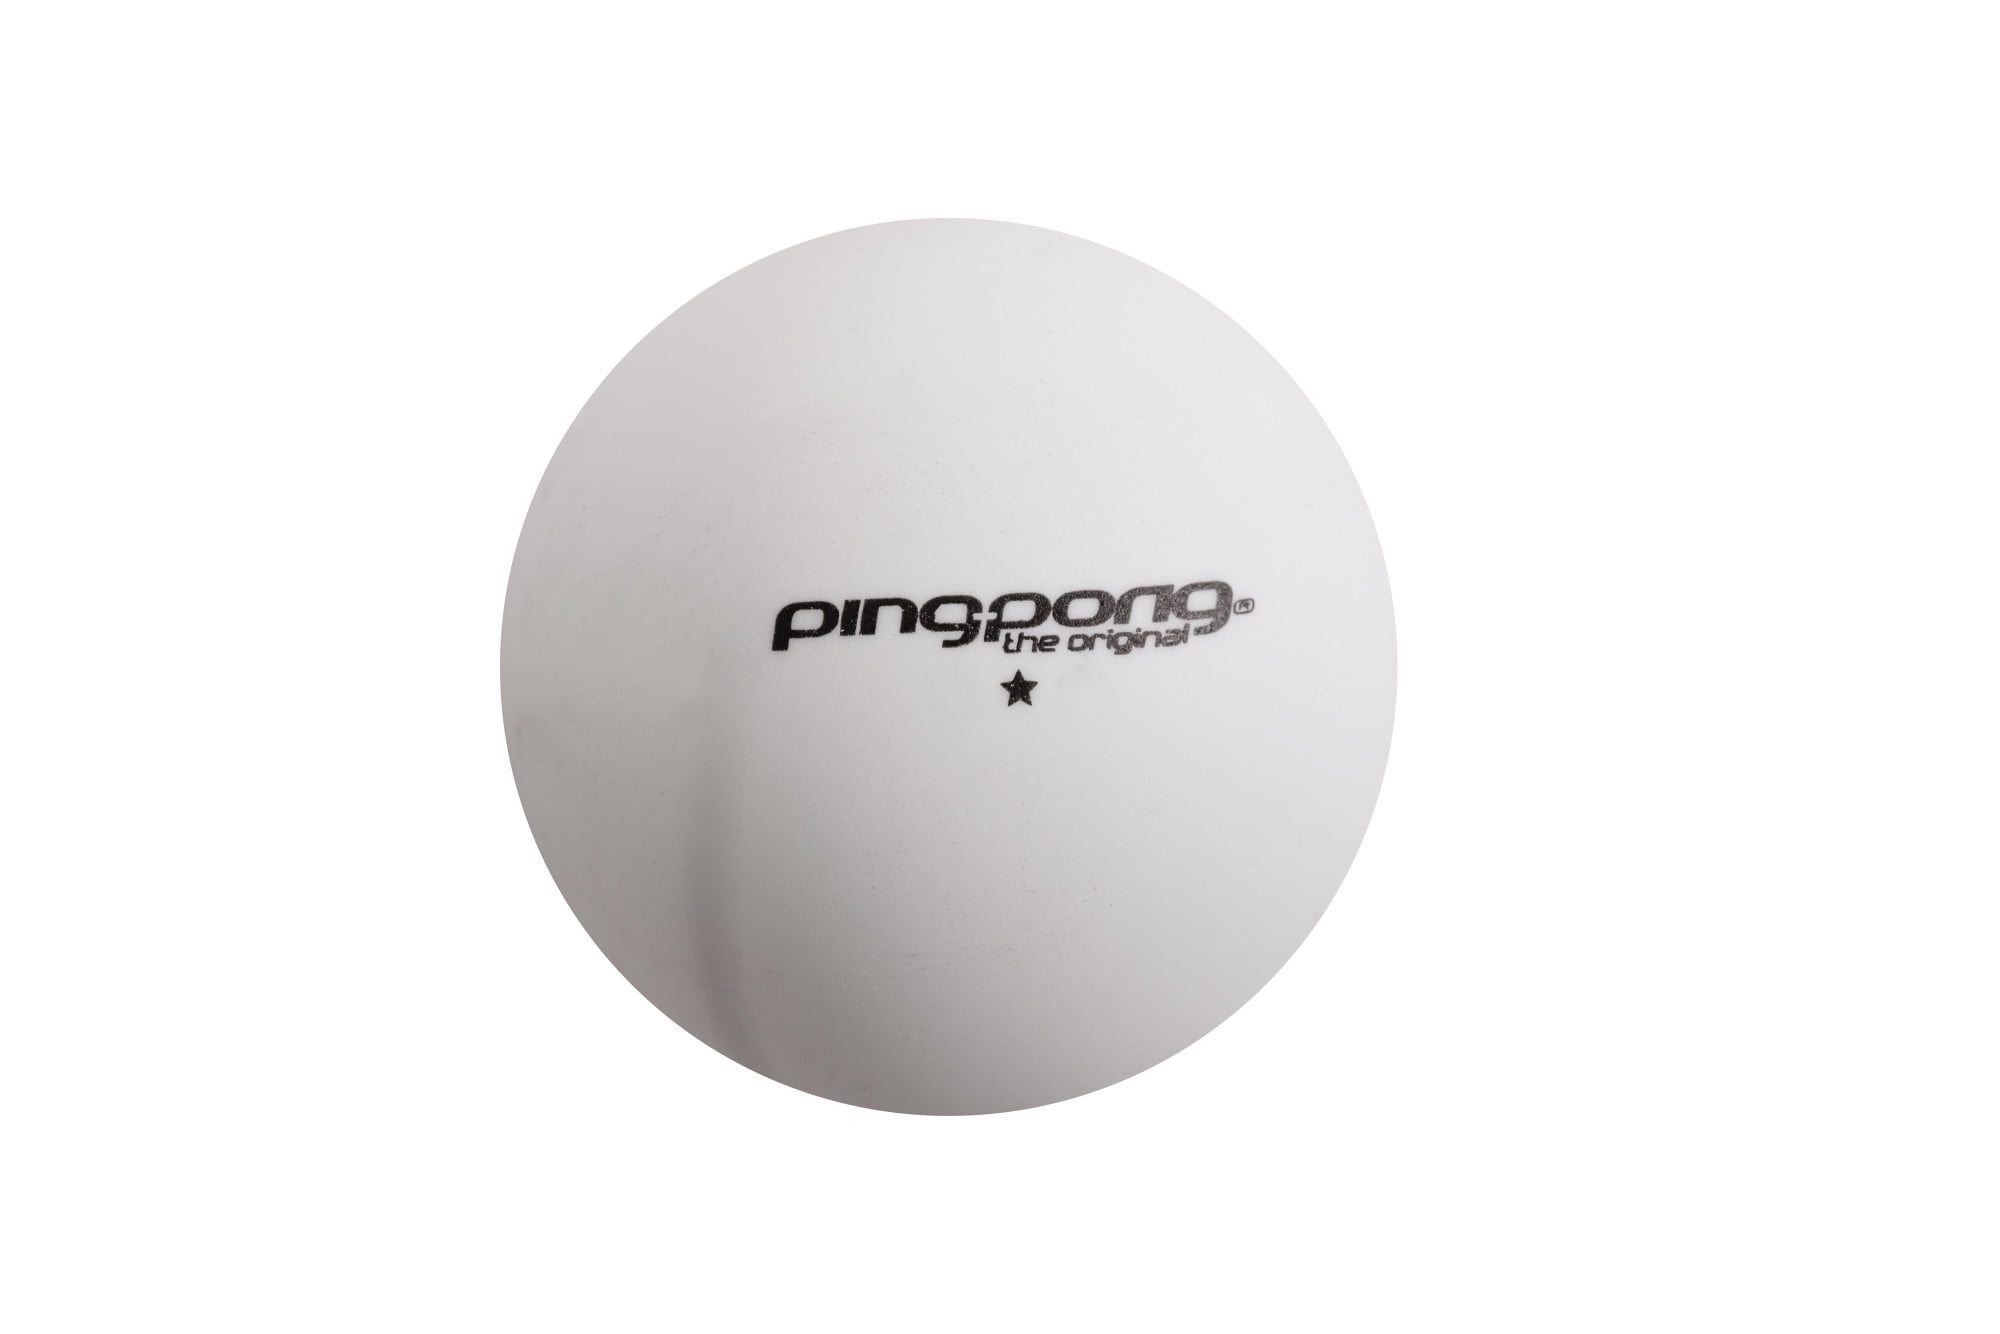 Official Penn 6-PACK 40mm TABLE TENNIS BALLS White PING PONG 1-Star RECREATIONAL 